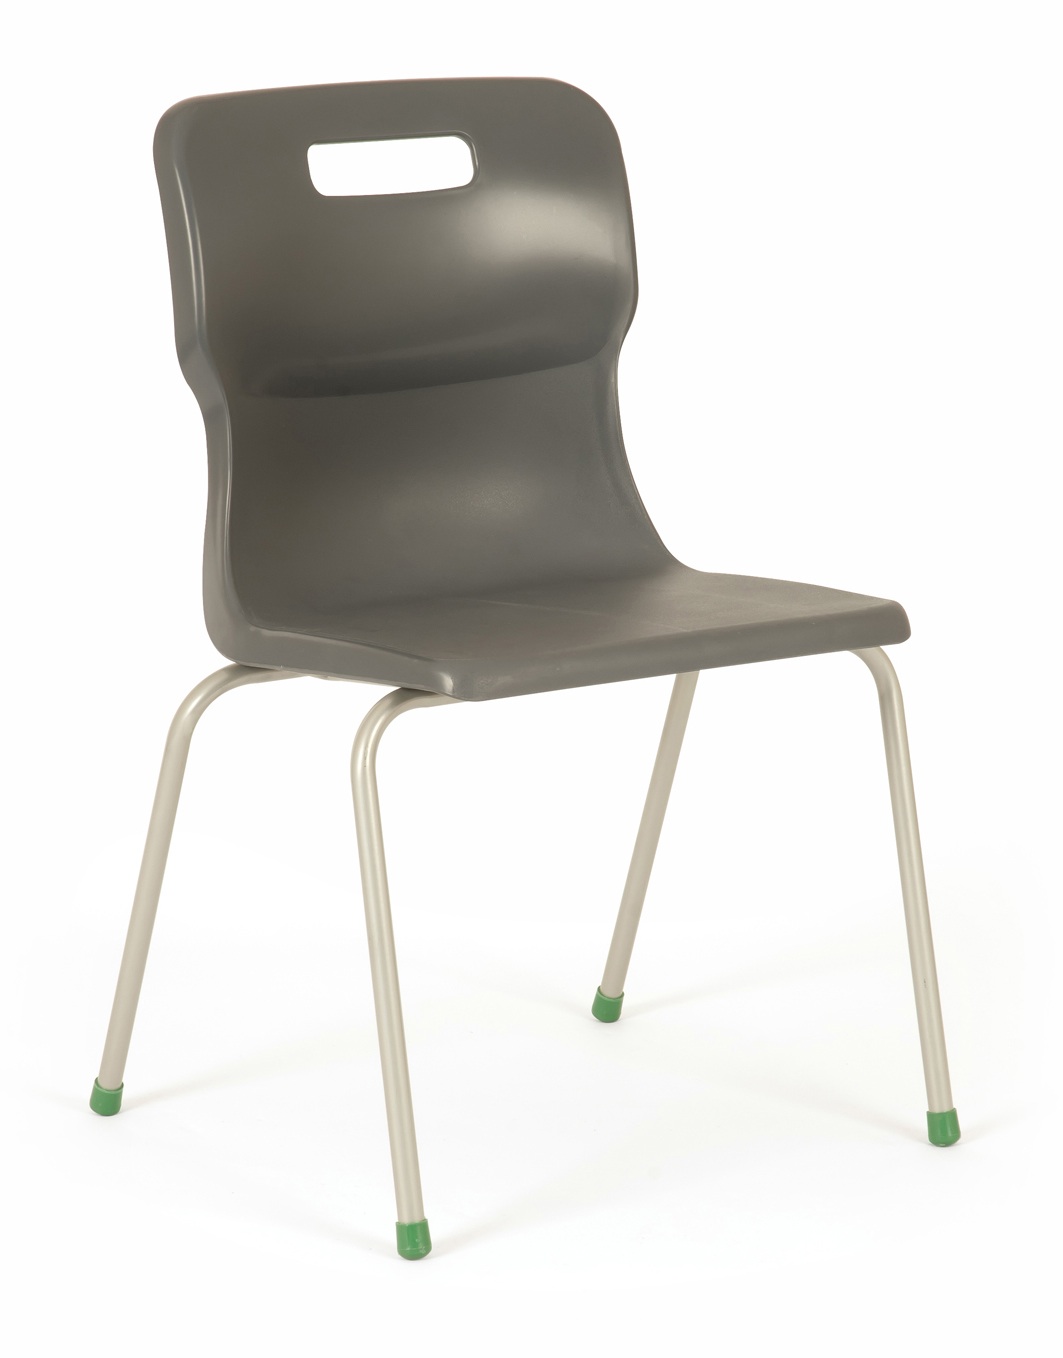 Titan 4 Leg Classroom Chair in Black or Charcoal